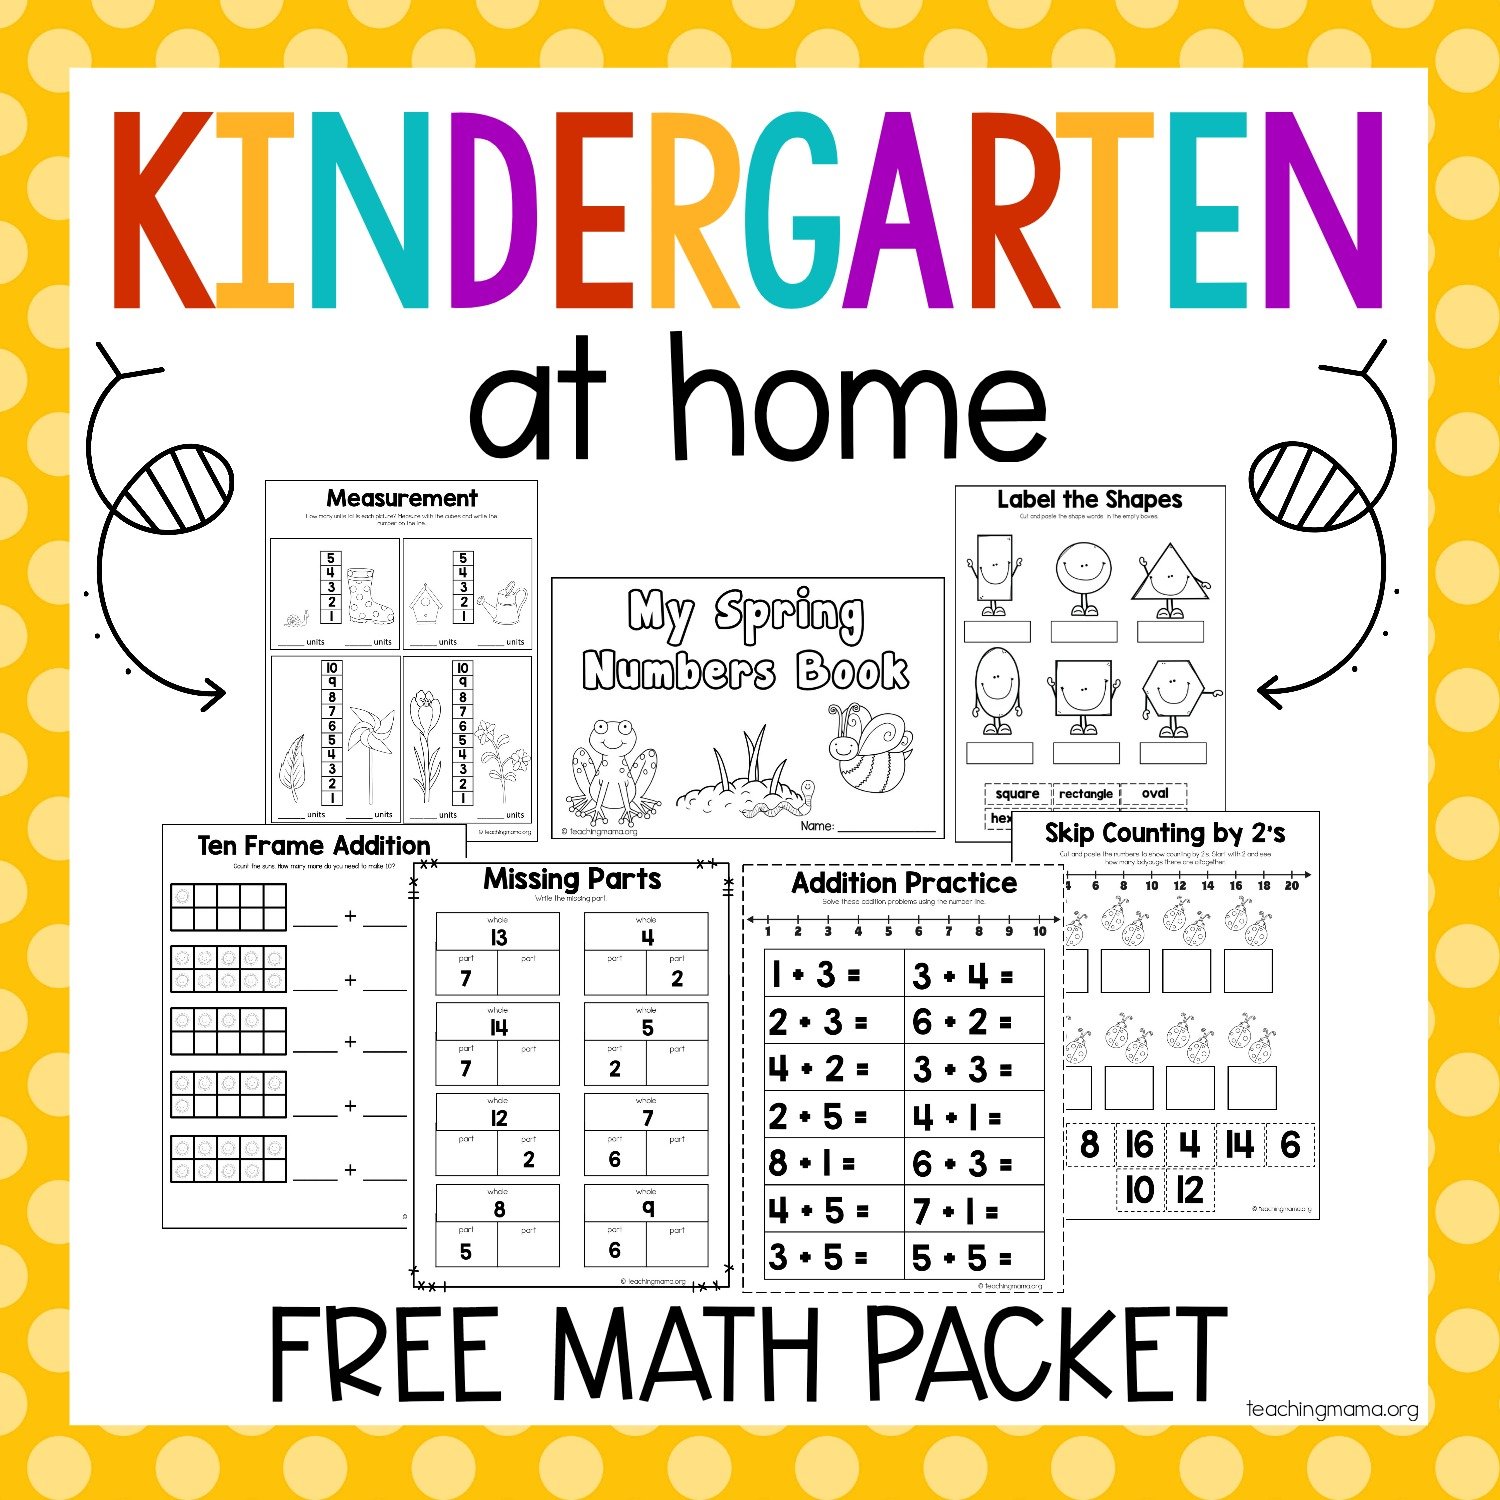 homework packet for kindergarten